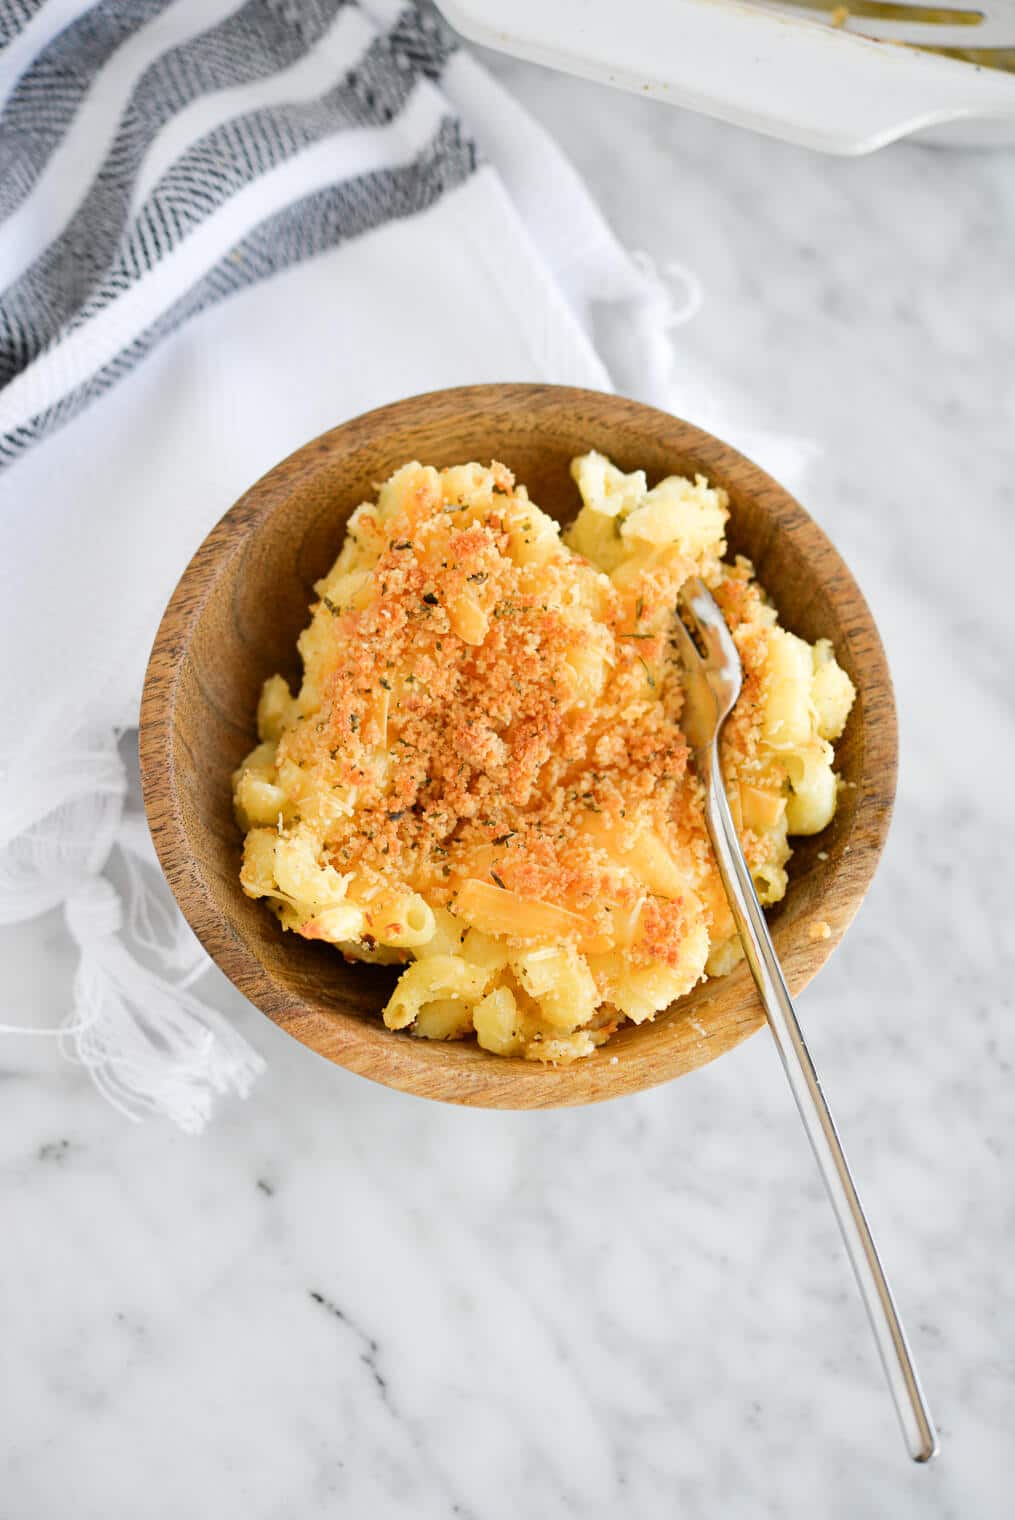 custard vs bechamel macaroni and cheese